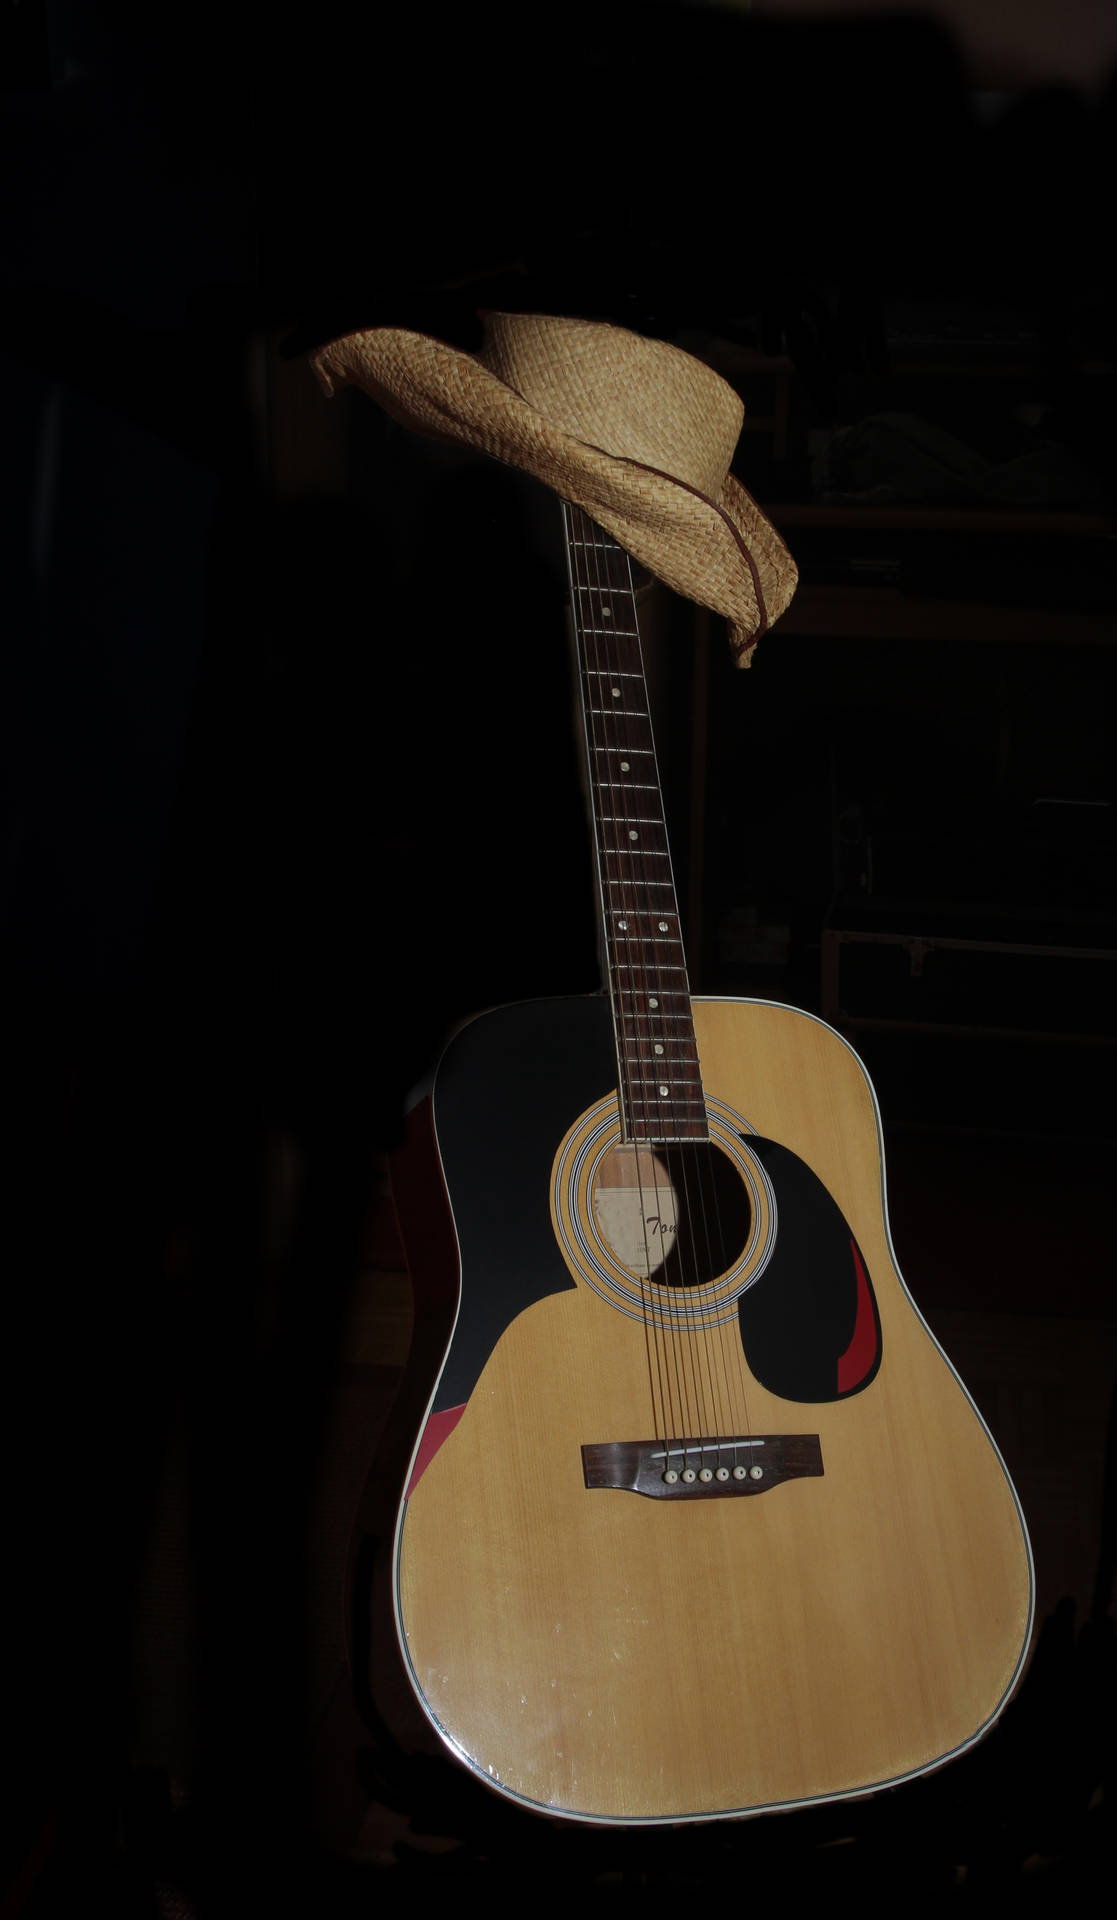 Acoustic Guitar Woven Hat Wallpaper